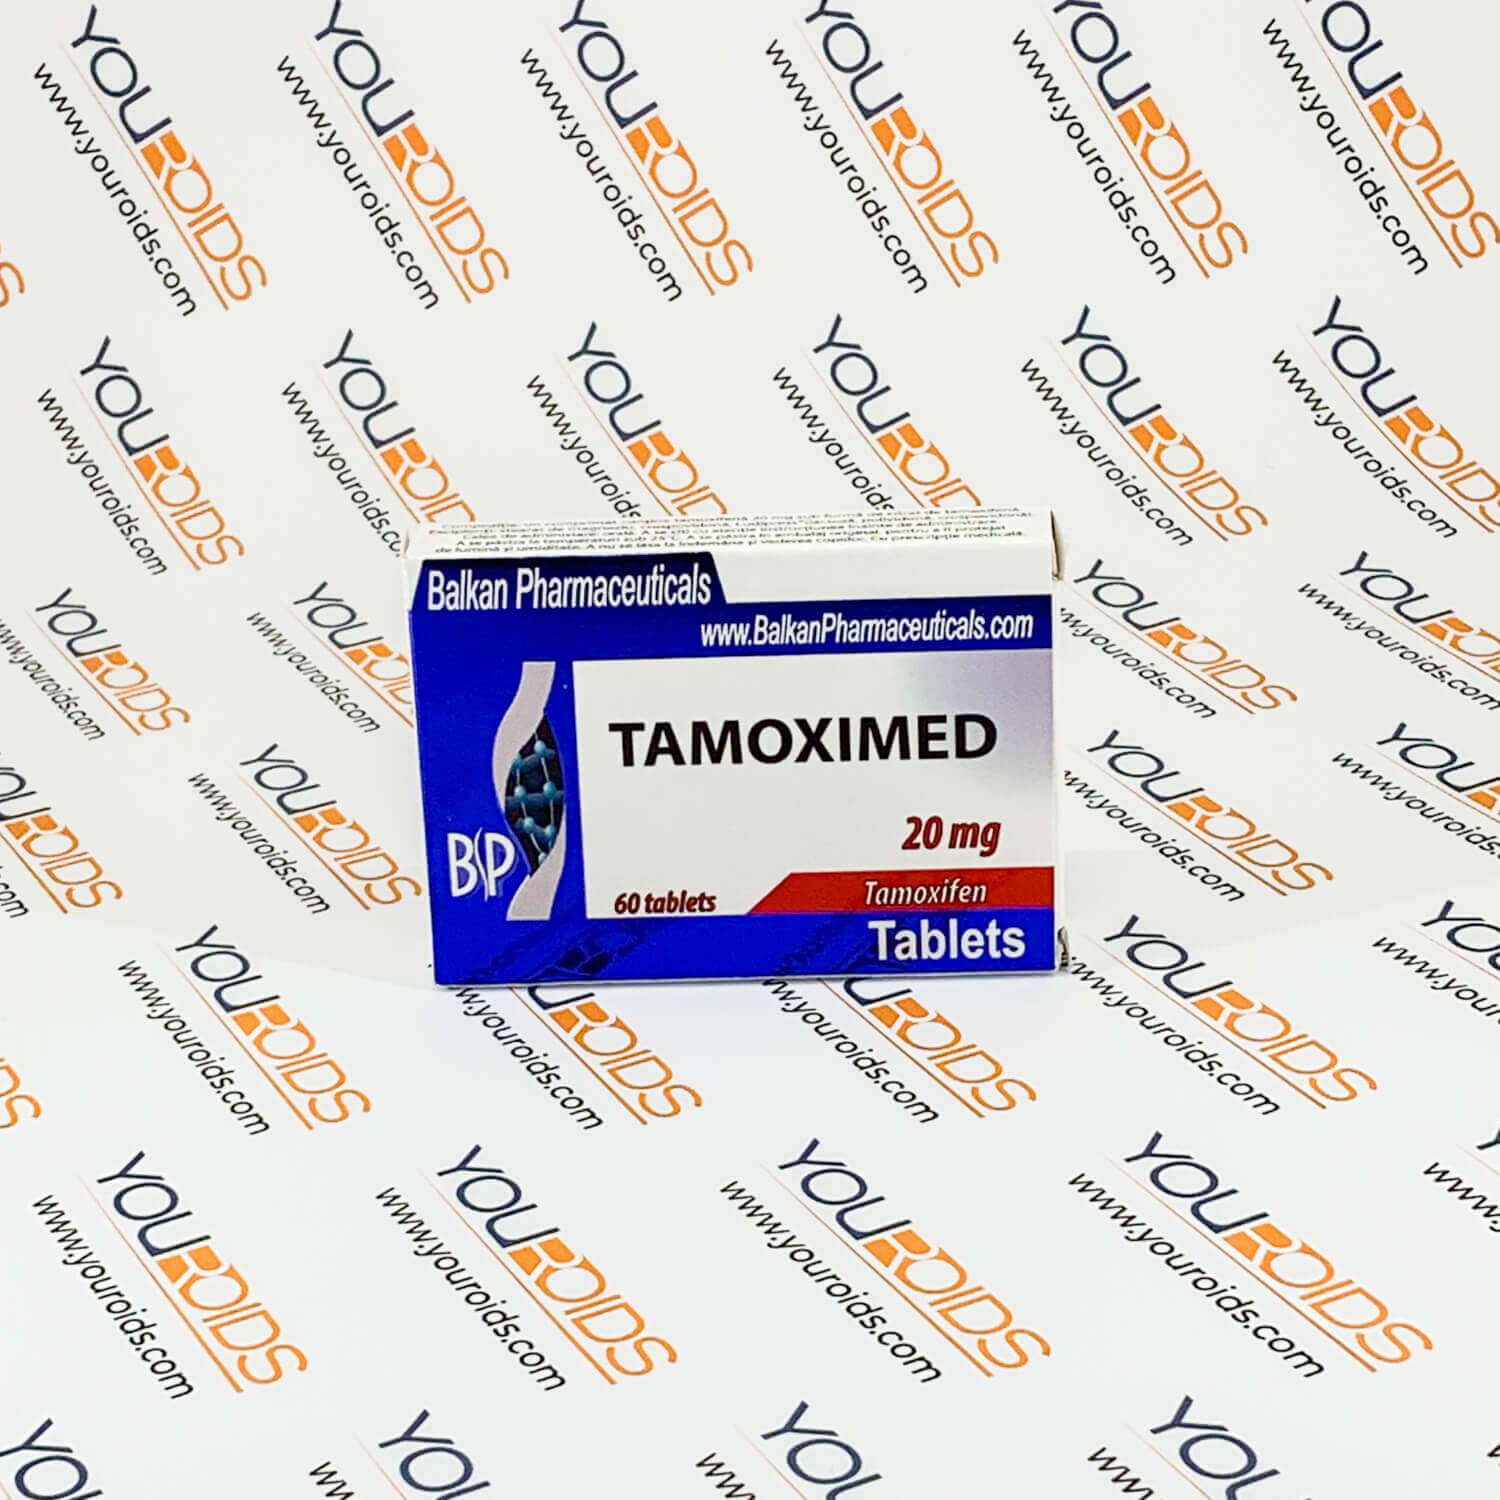 Tamoximed 20mg pills Balkan Pharmaceuticals